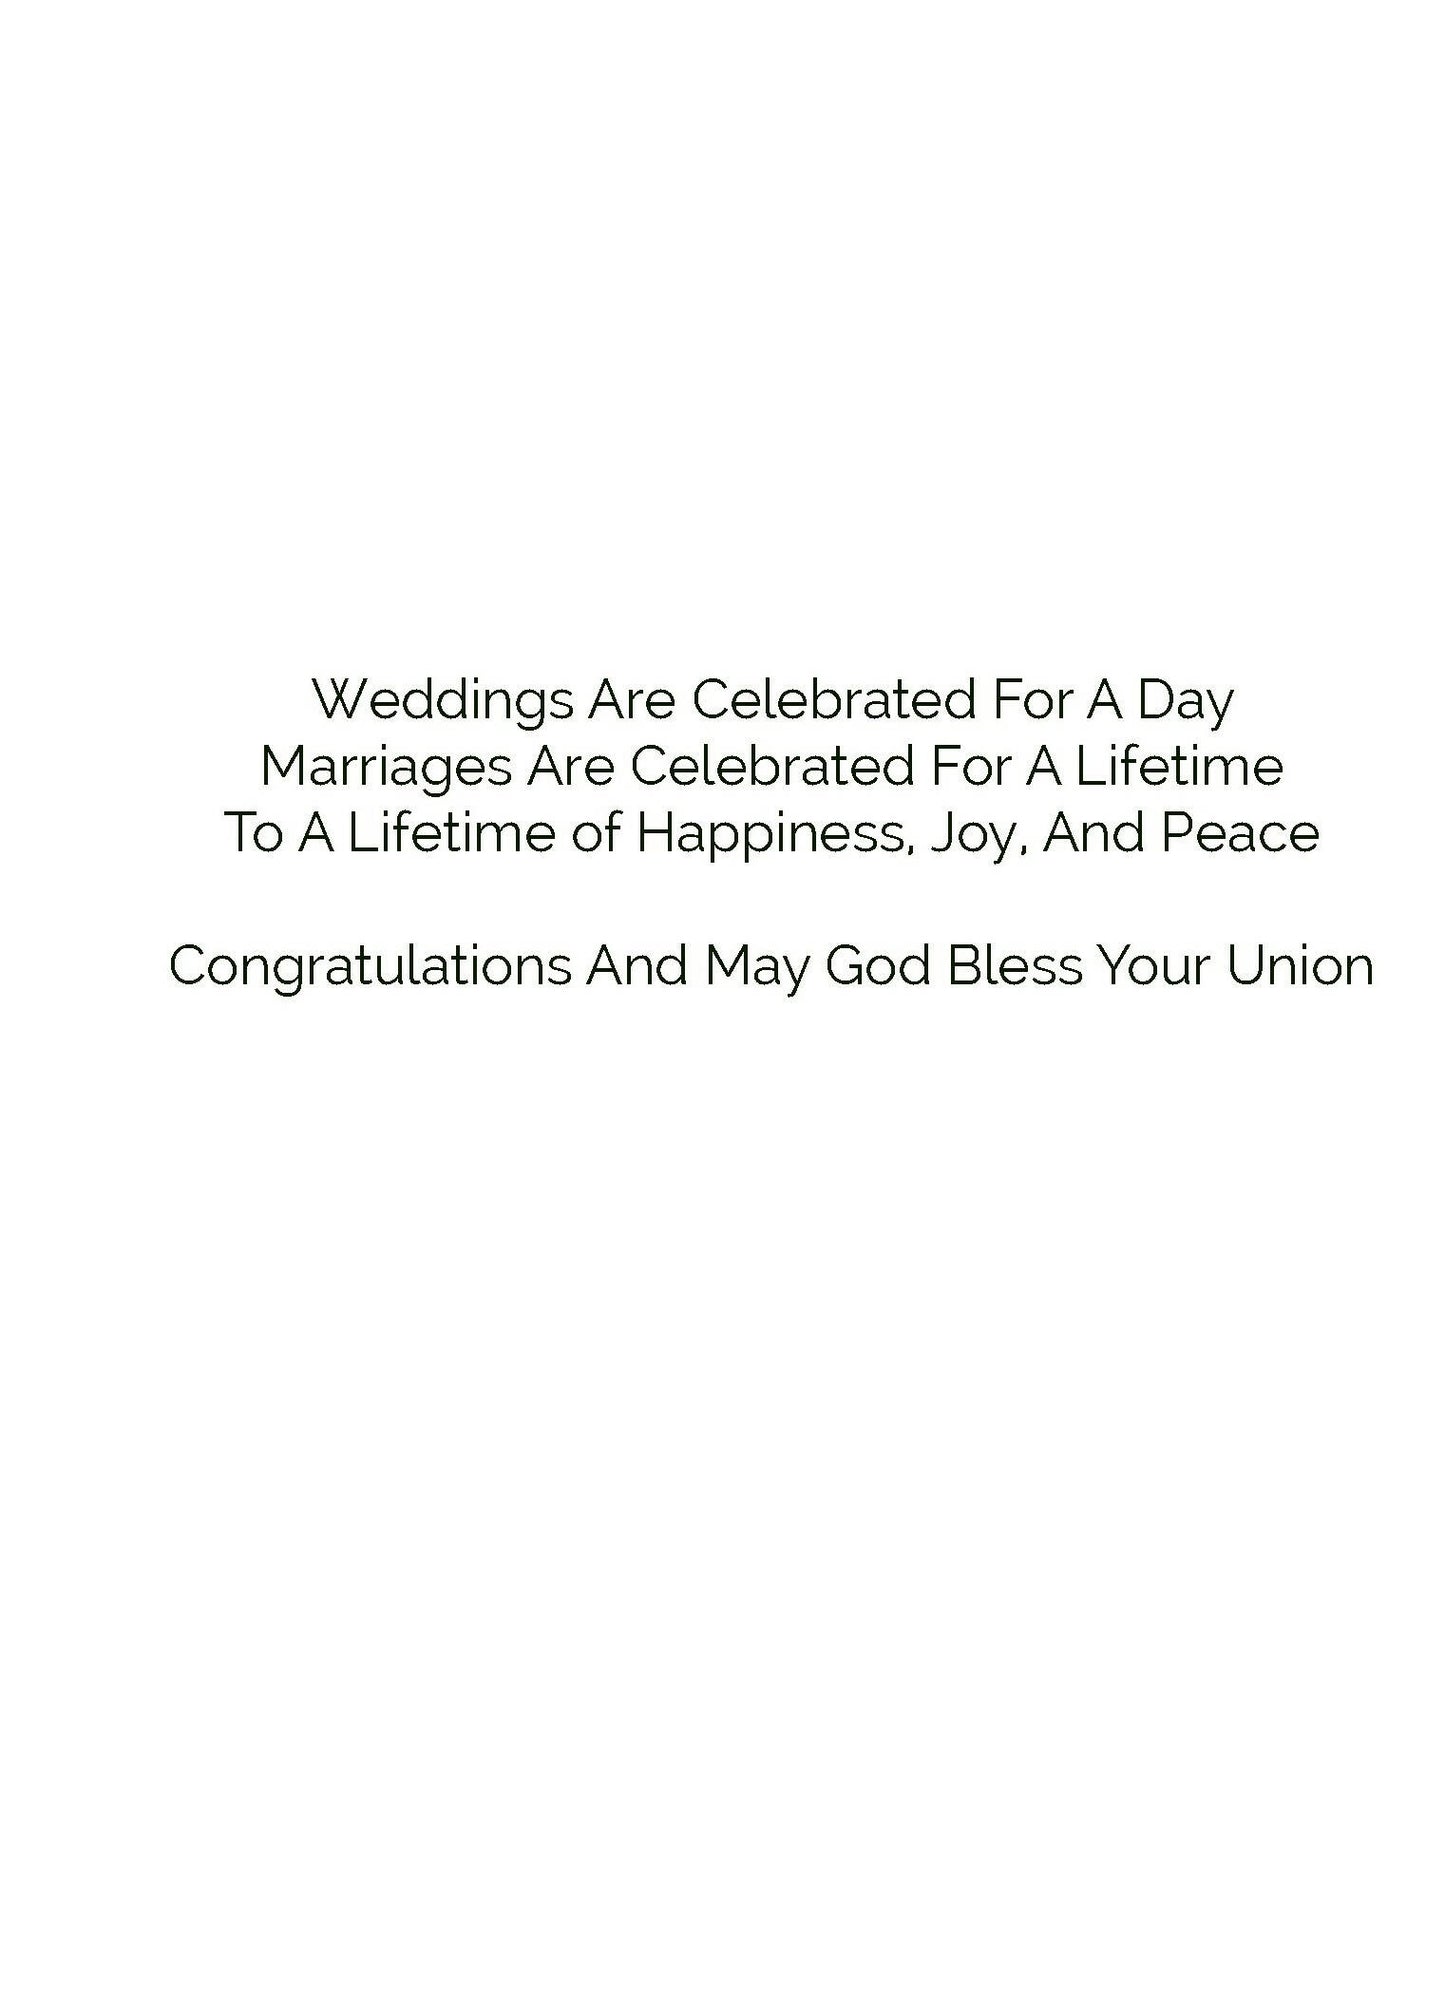 Wedding Celebrations-Congratulations